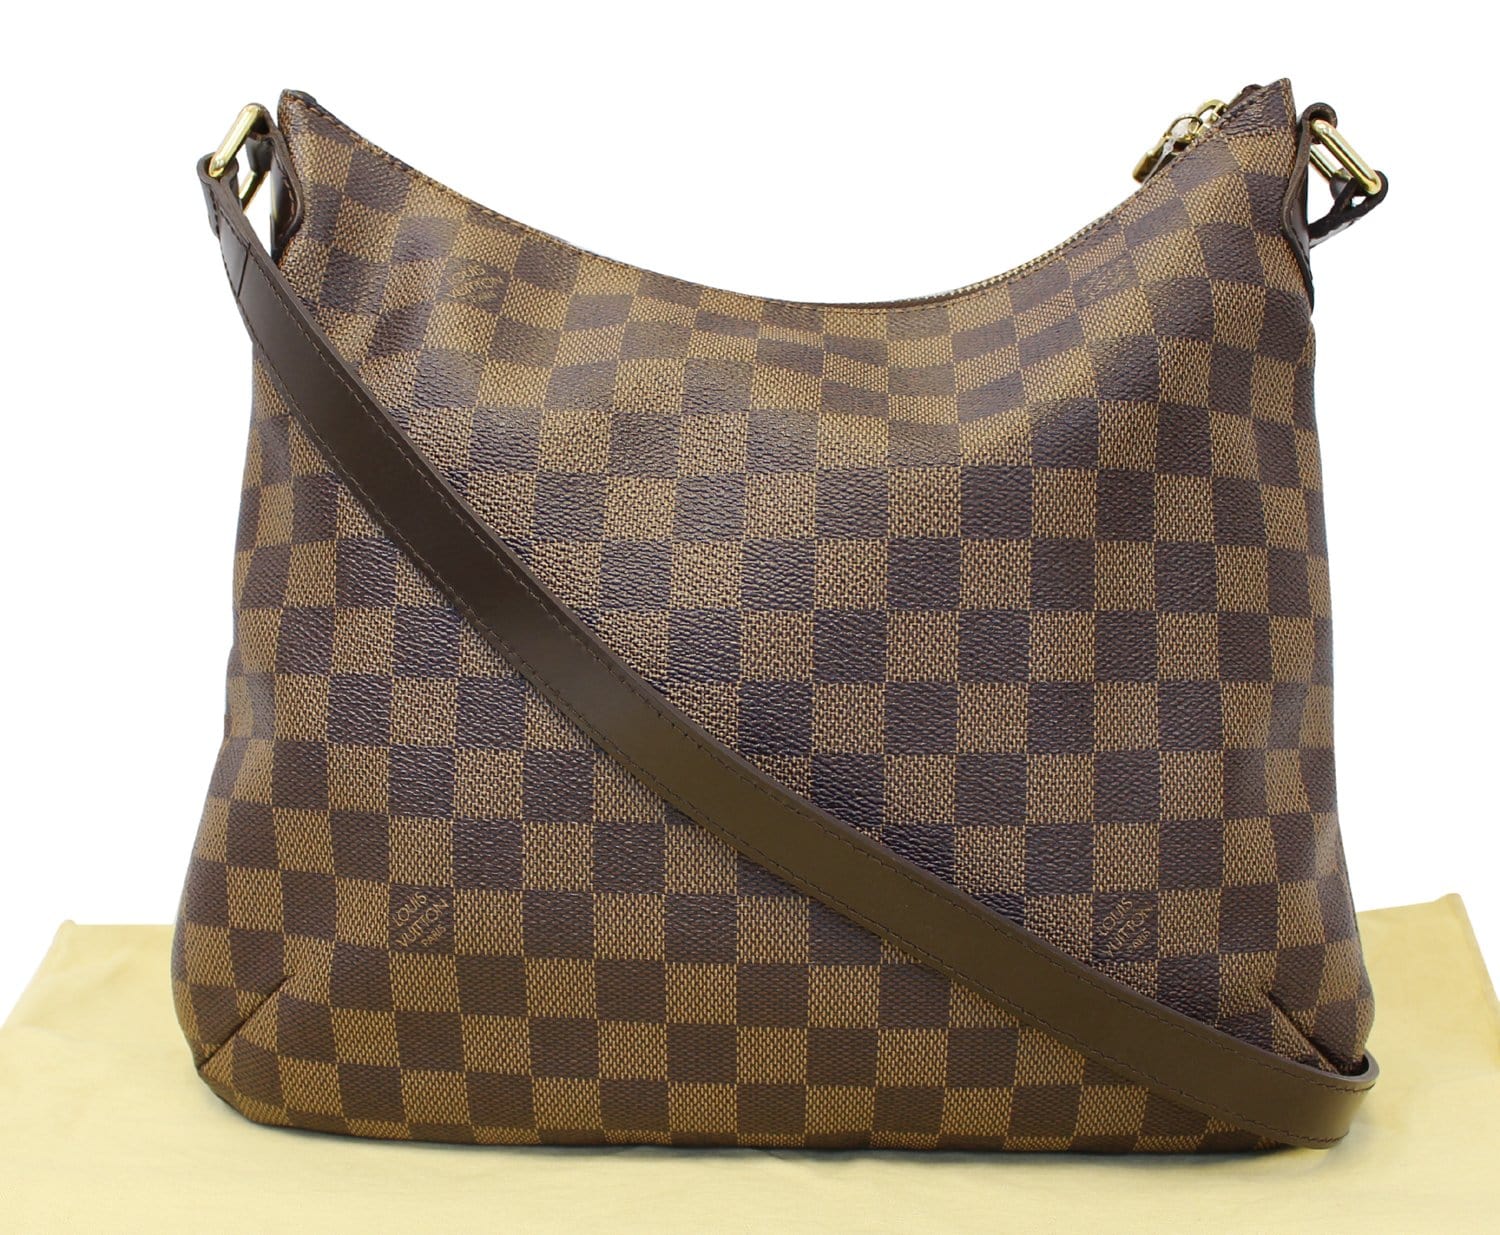 Preown, Authentic LV/Louis Vuitton Damier crossbody bag. w/dustbag. no box.